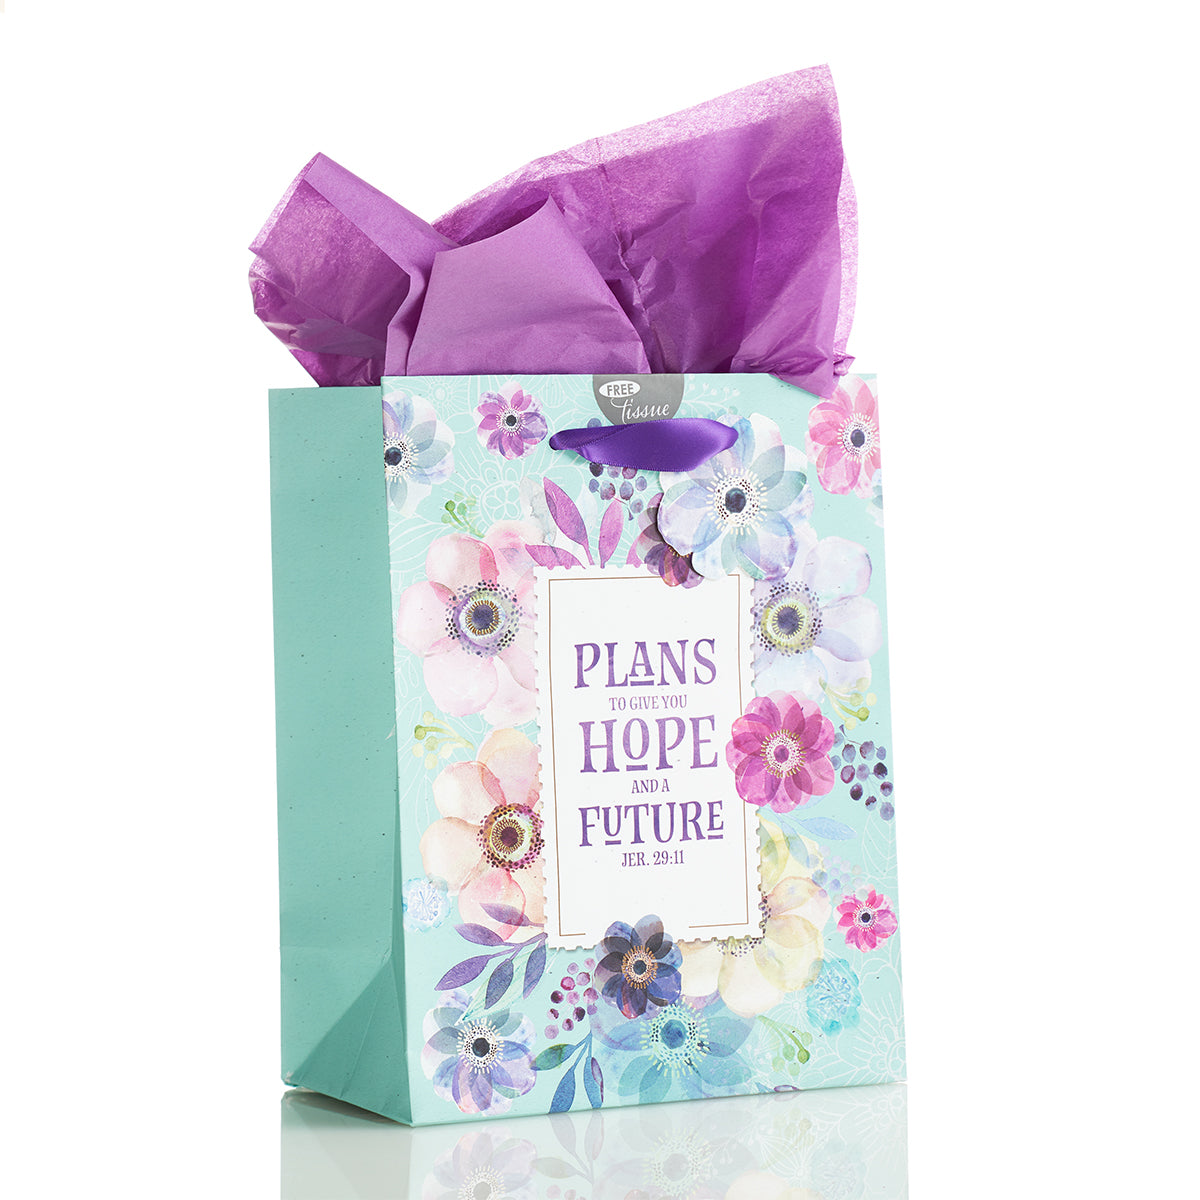 Image of Medium Gift Bag: Plans Hope Future - Jeremiah 29:11 other